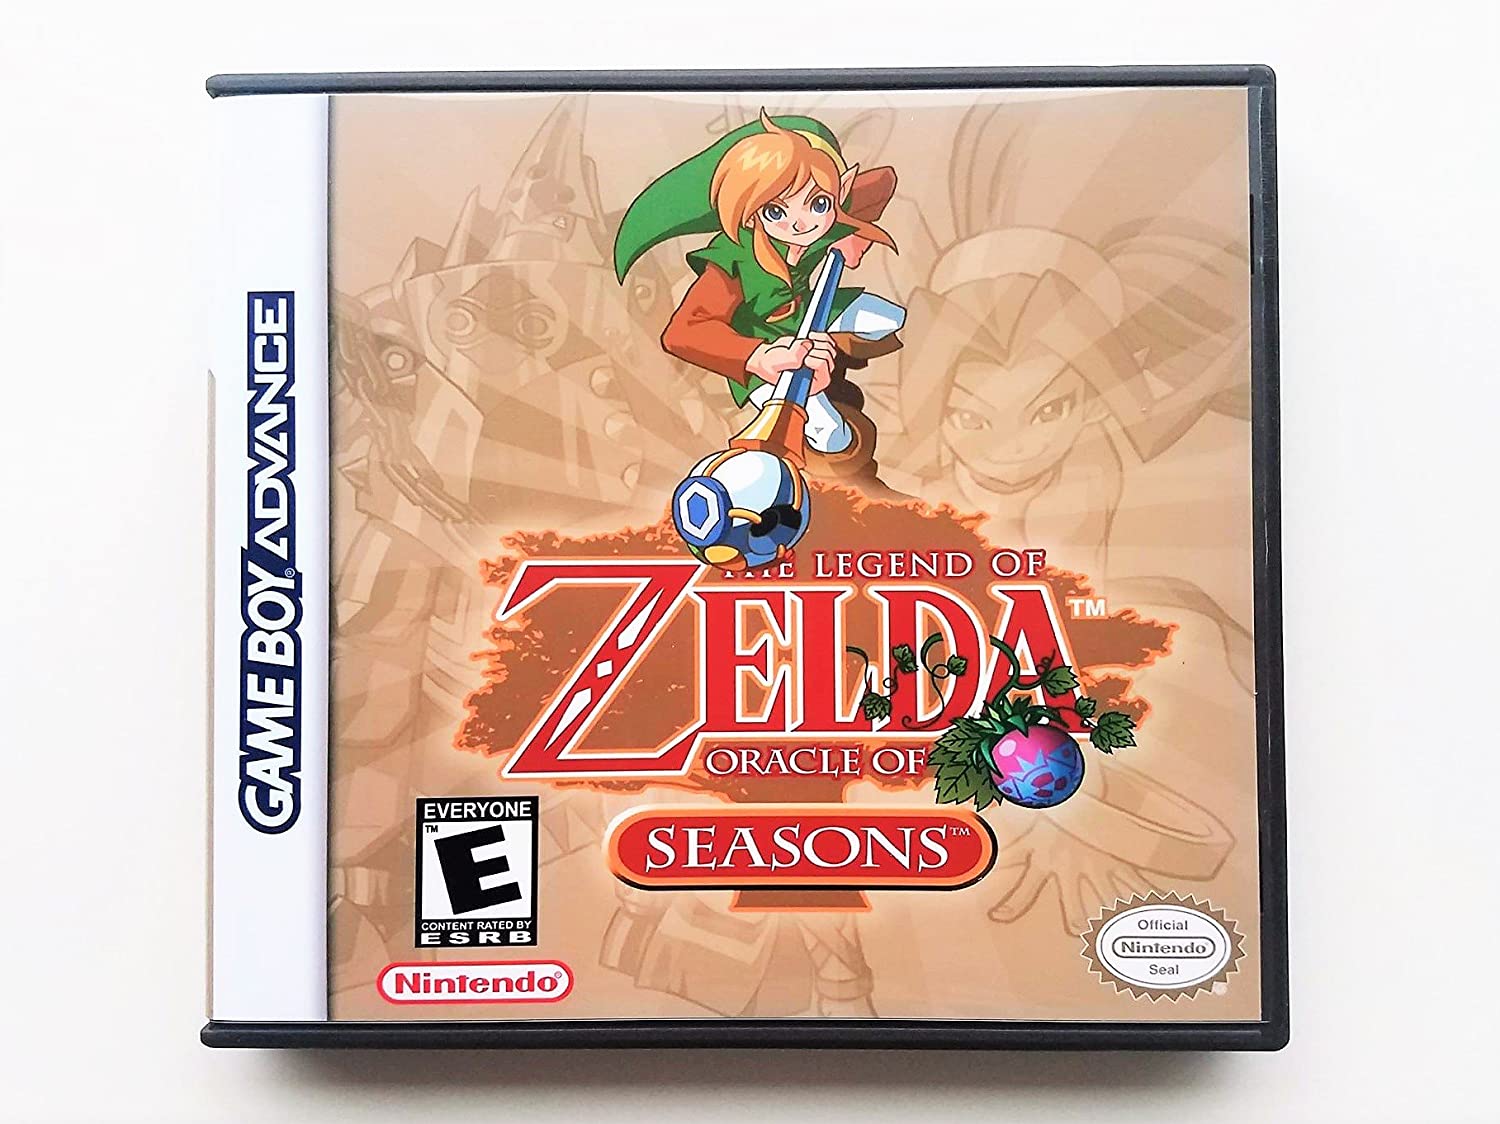 Gameboy Advance AKA The Legend of Zelda:Oracle of Seasons